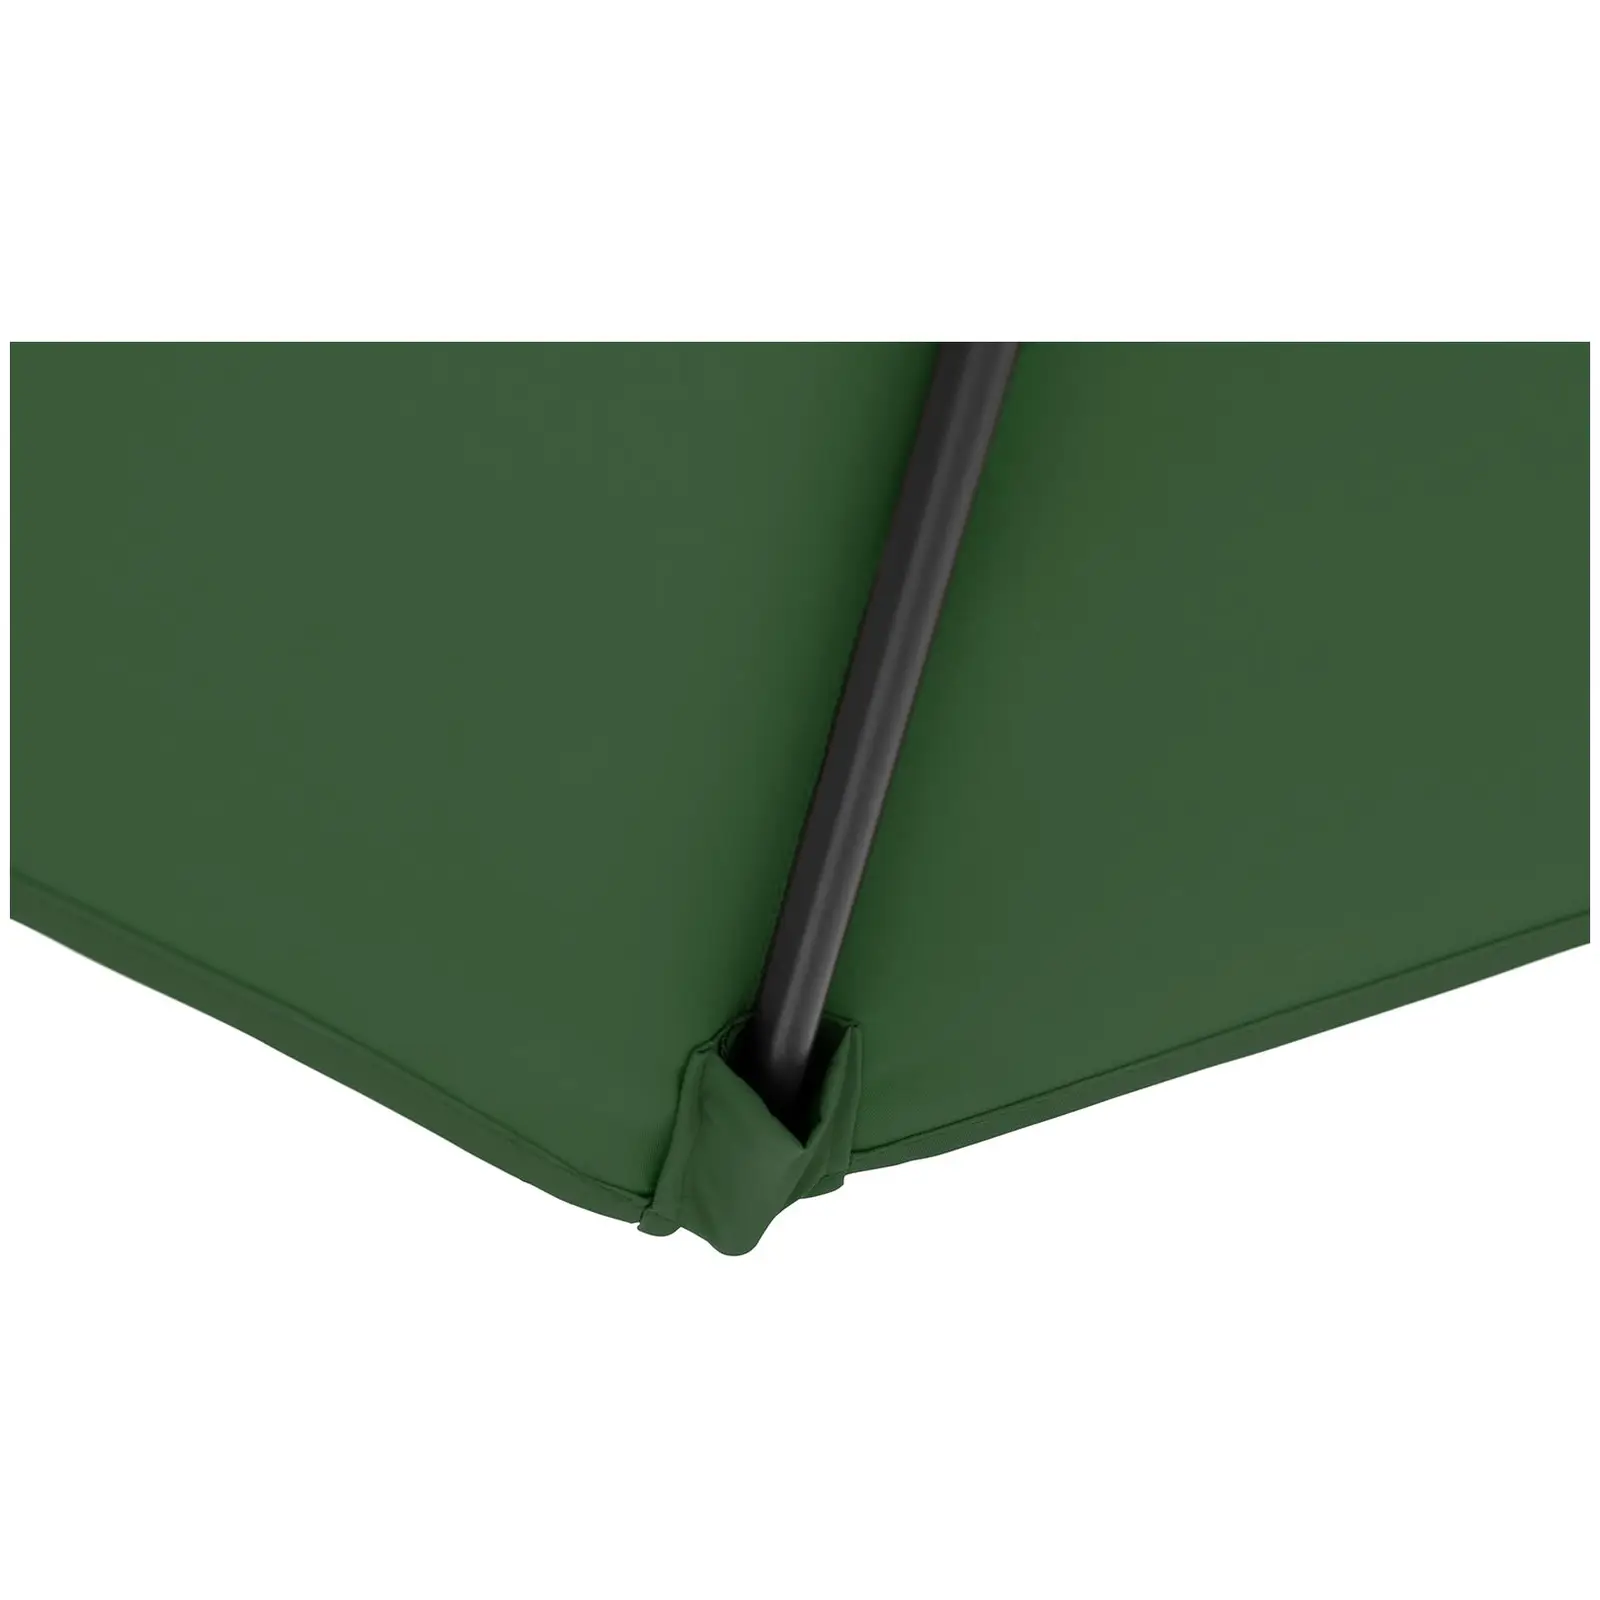 B-Ware Sonnenschirm groß - grün - rechteckig - 200 x 300 cm